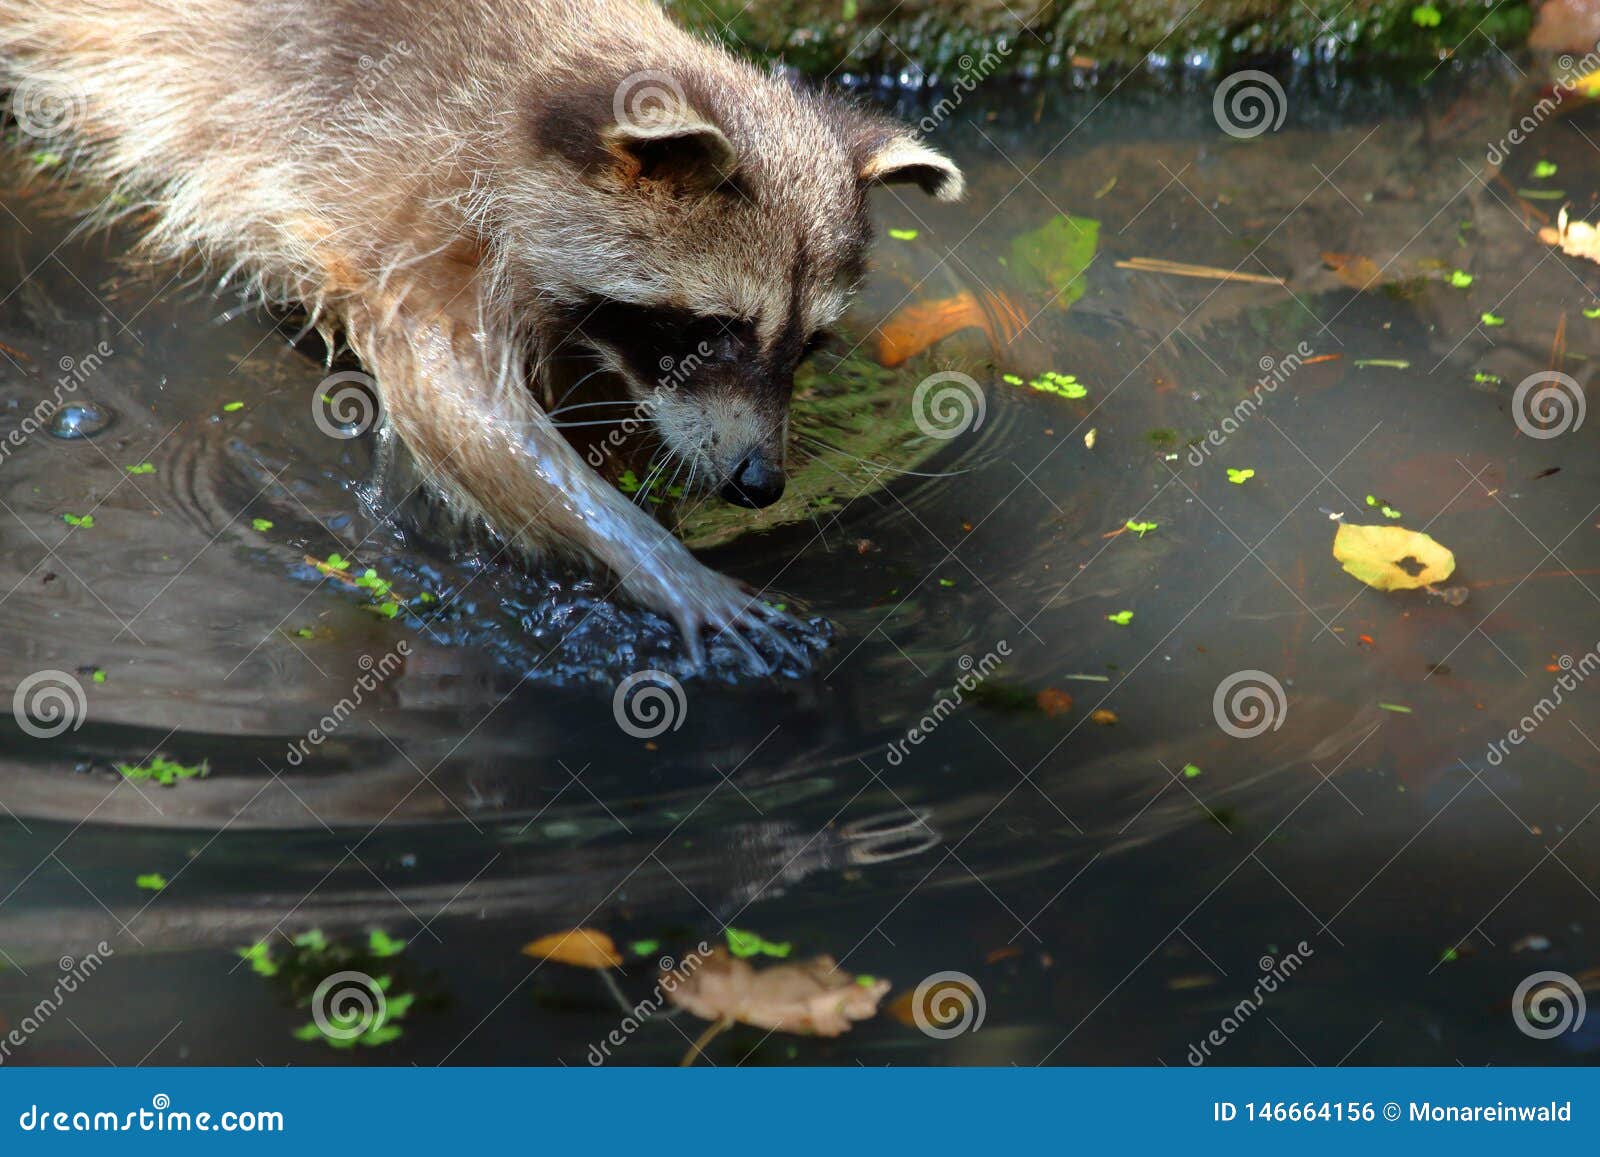 racoon in water in wildpark in bad mergentheim.